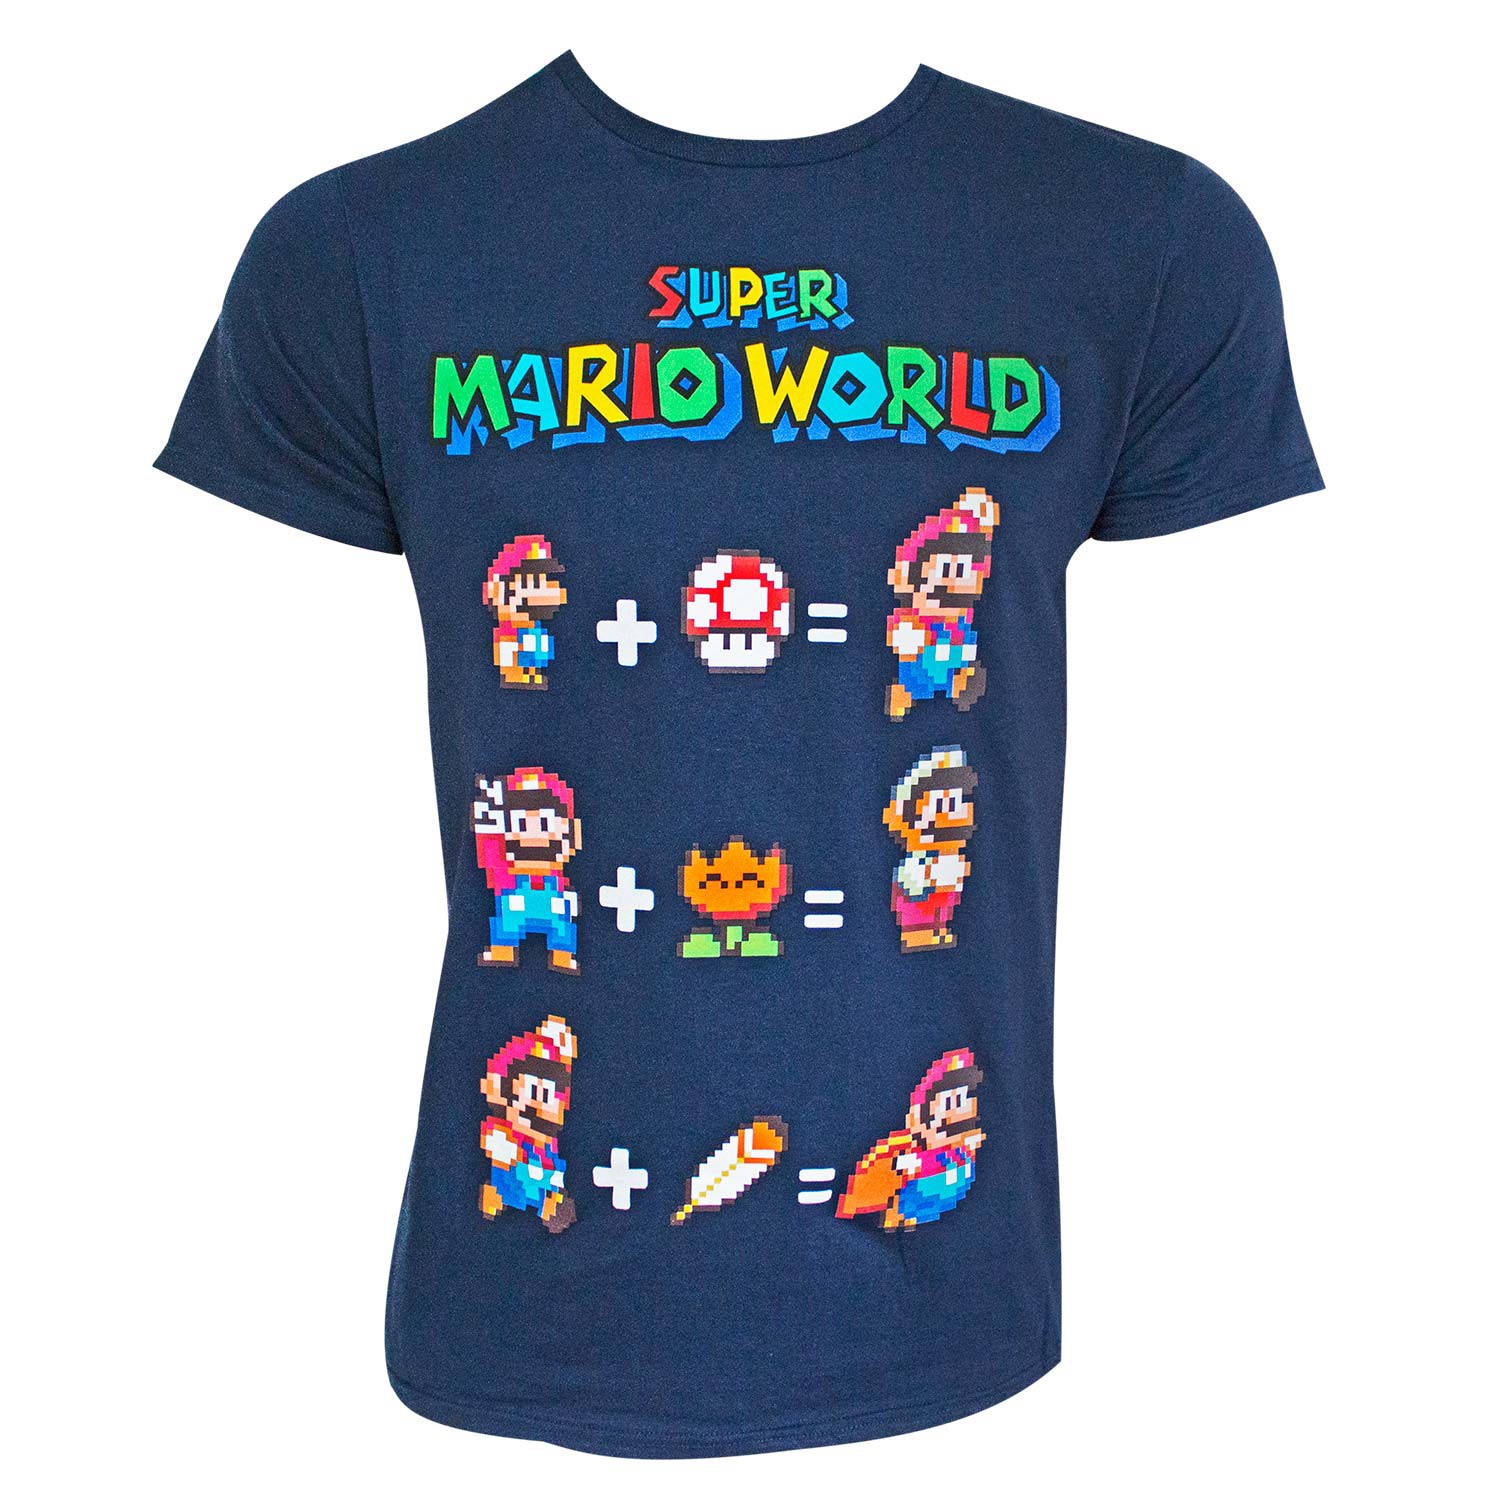 Super Mario World Equation Navy Blue Tee Shirt